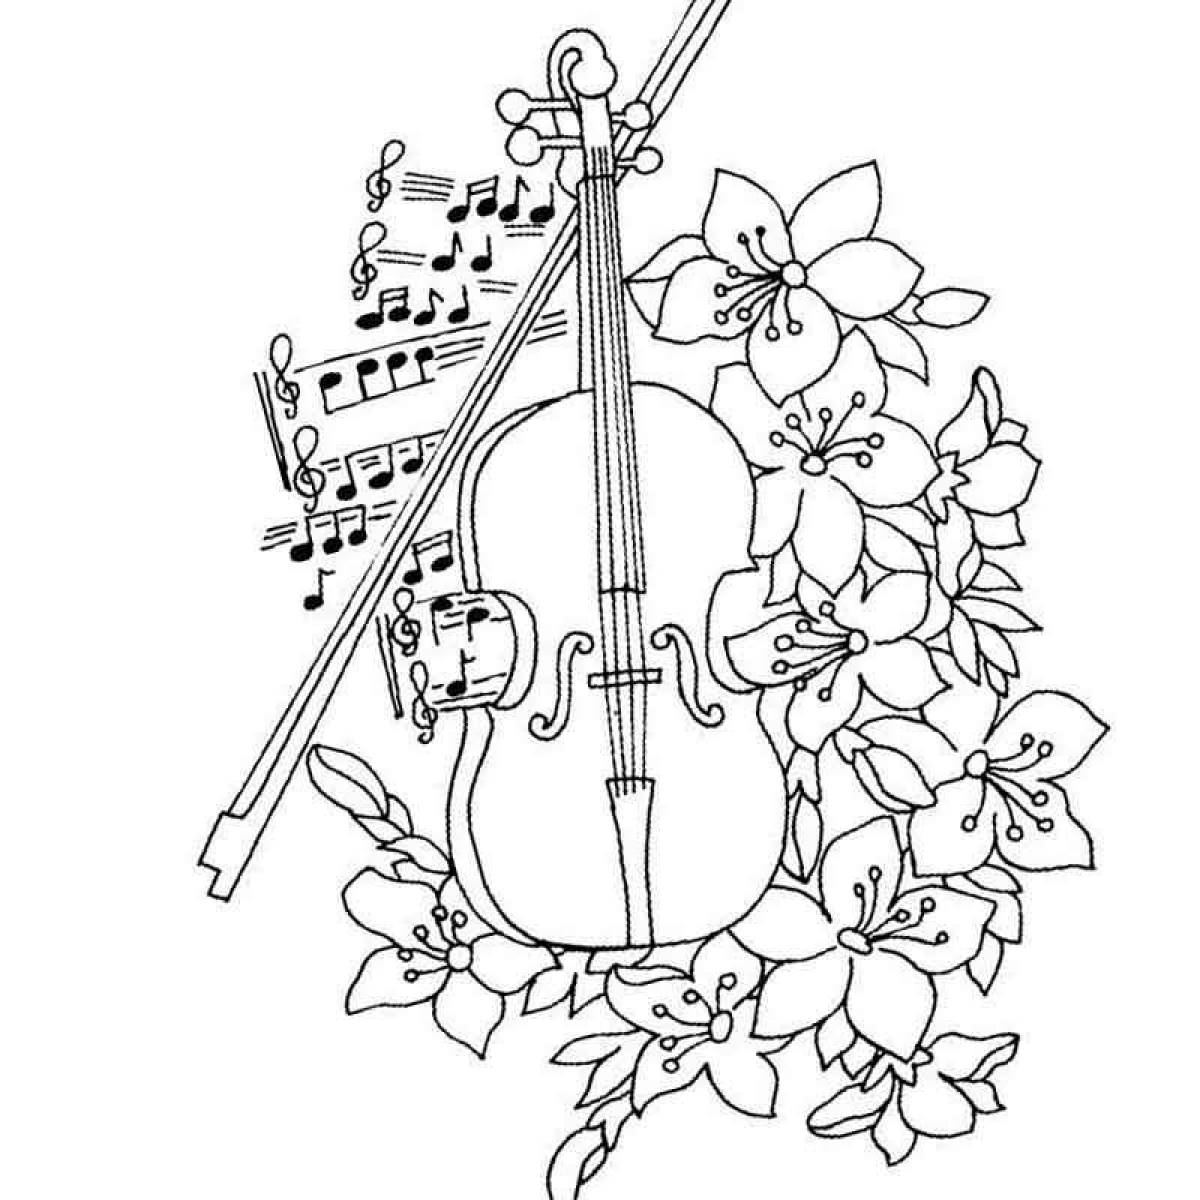 Coloring page artistic violin